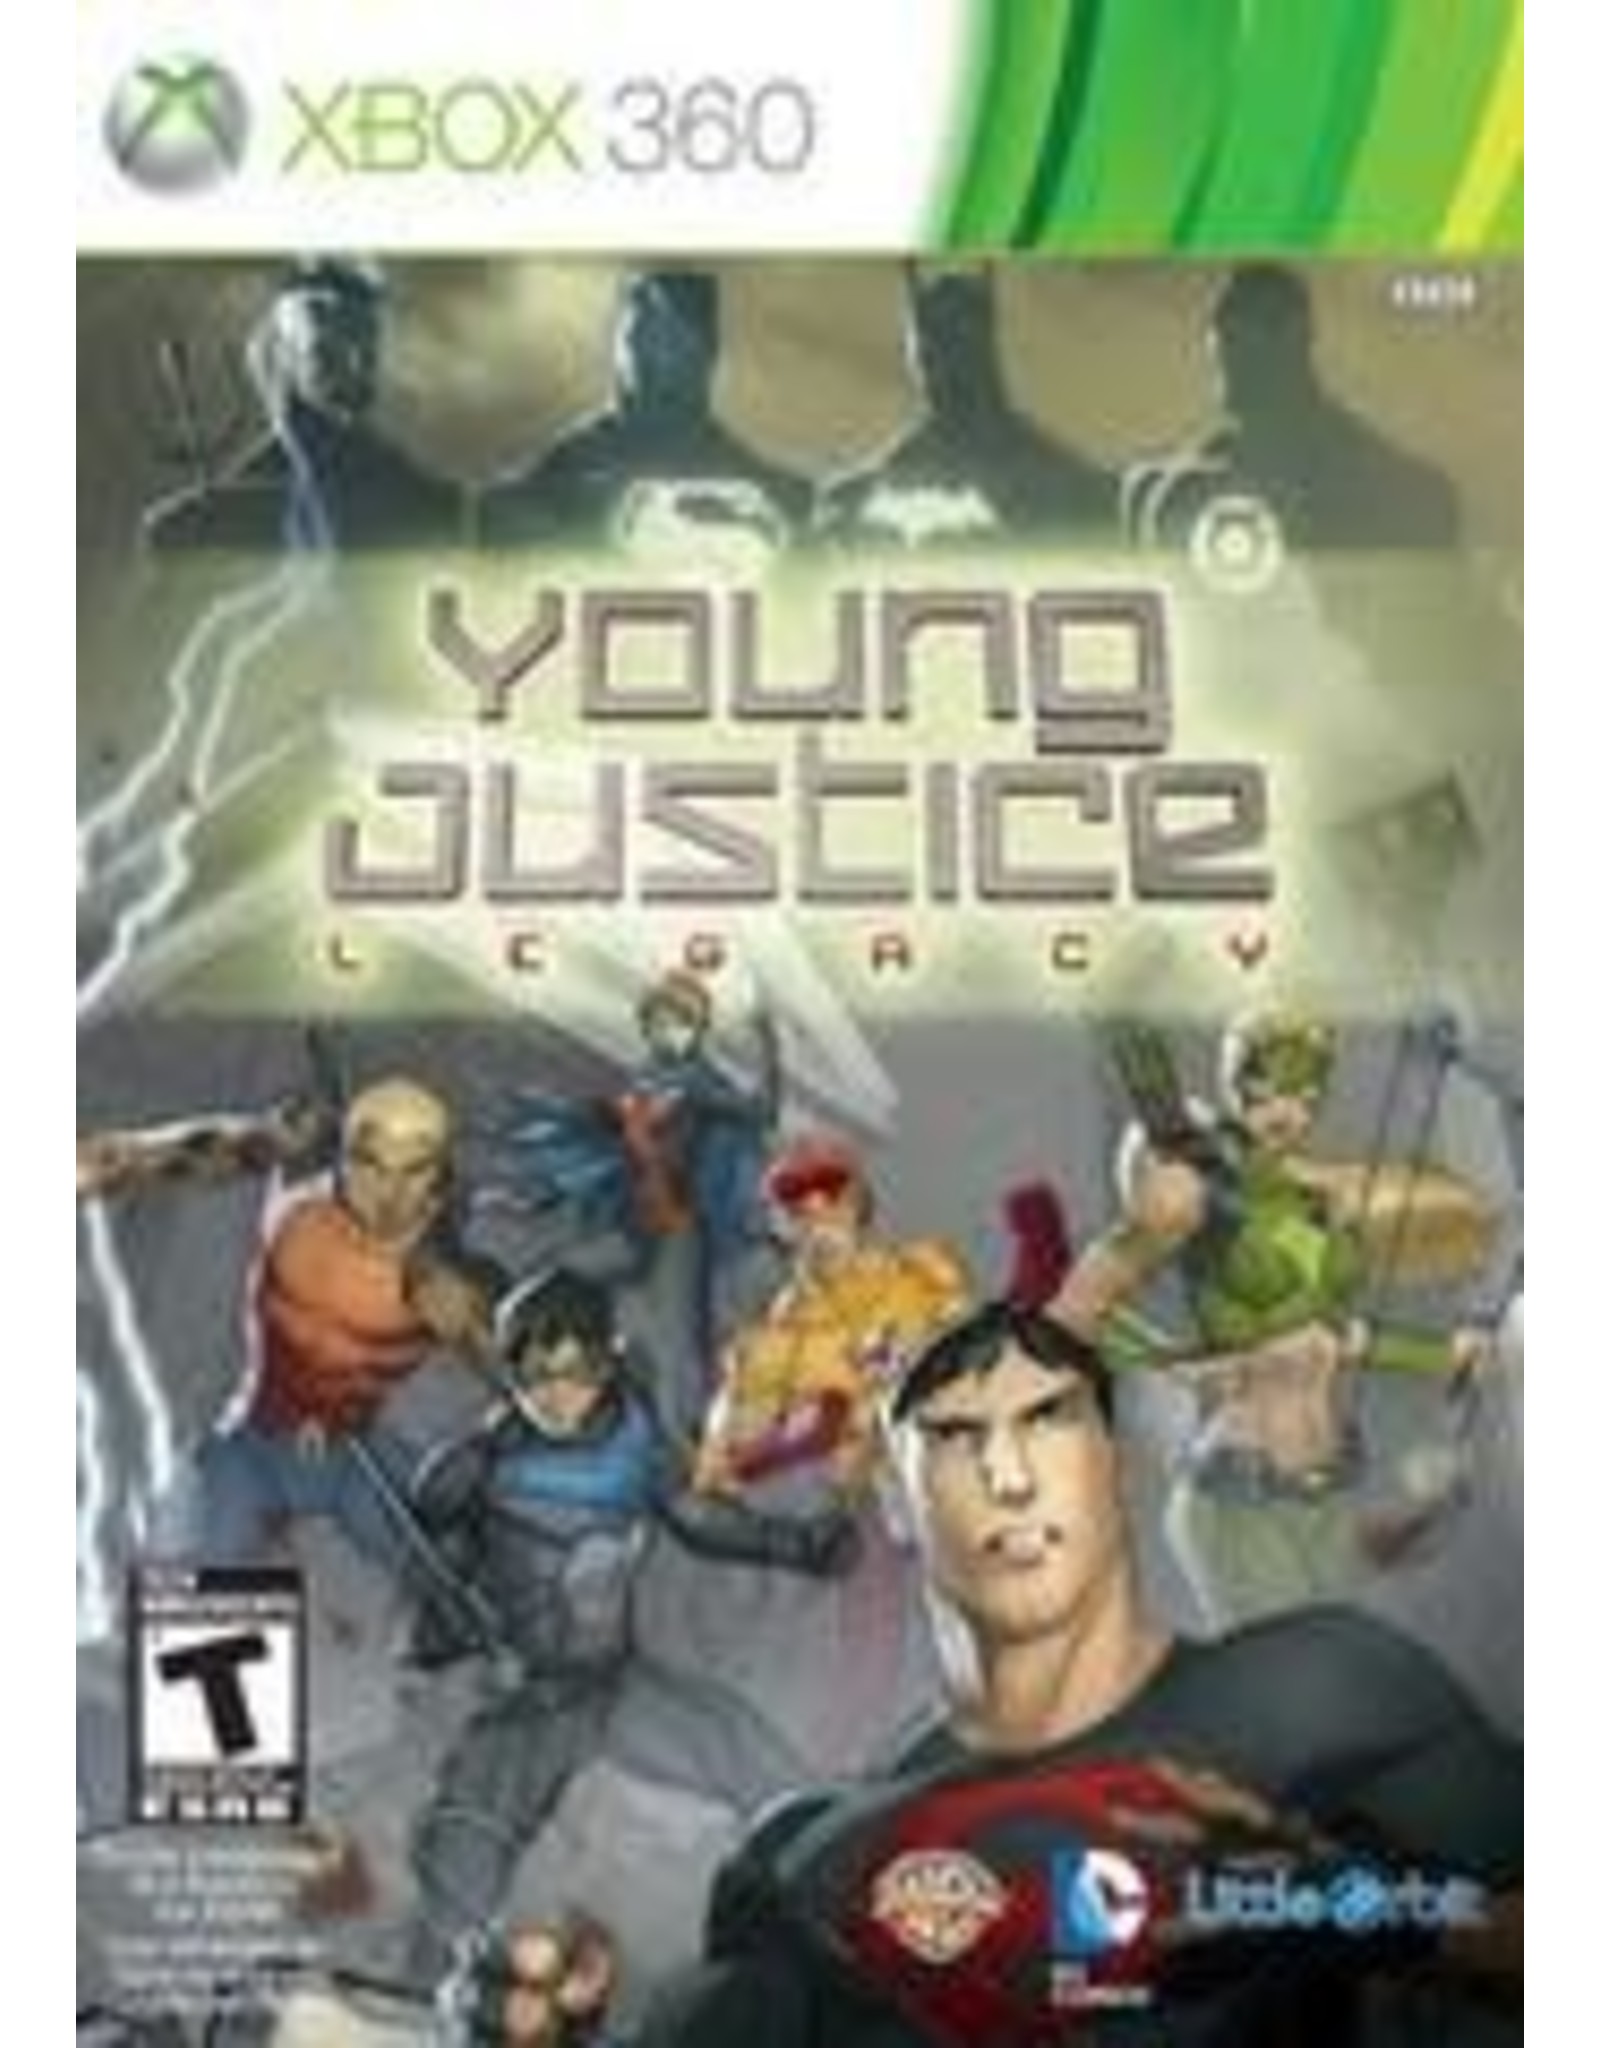 Xbox 360 Young Justice: Legacy (CiB)